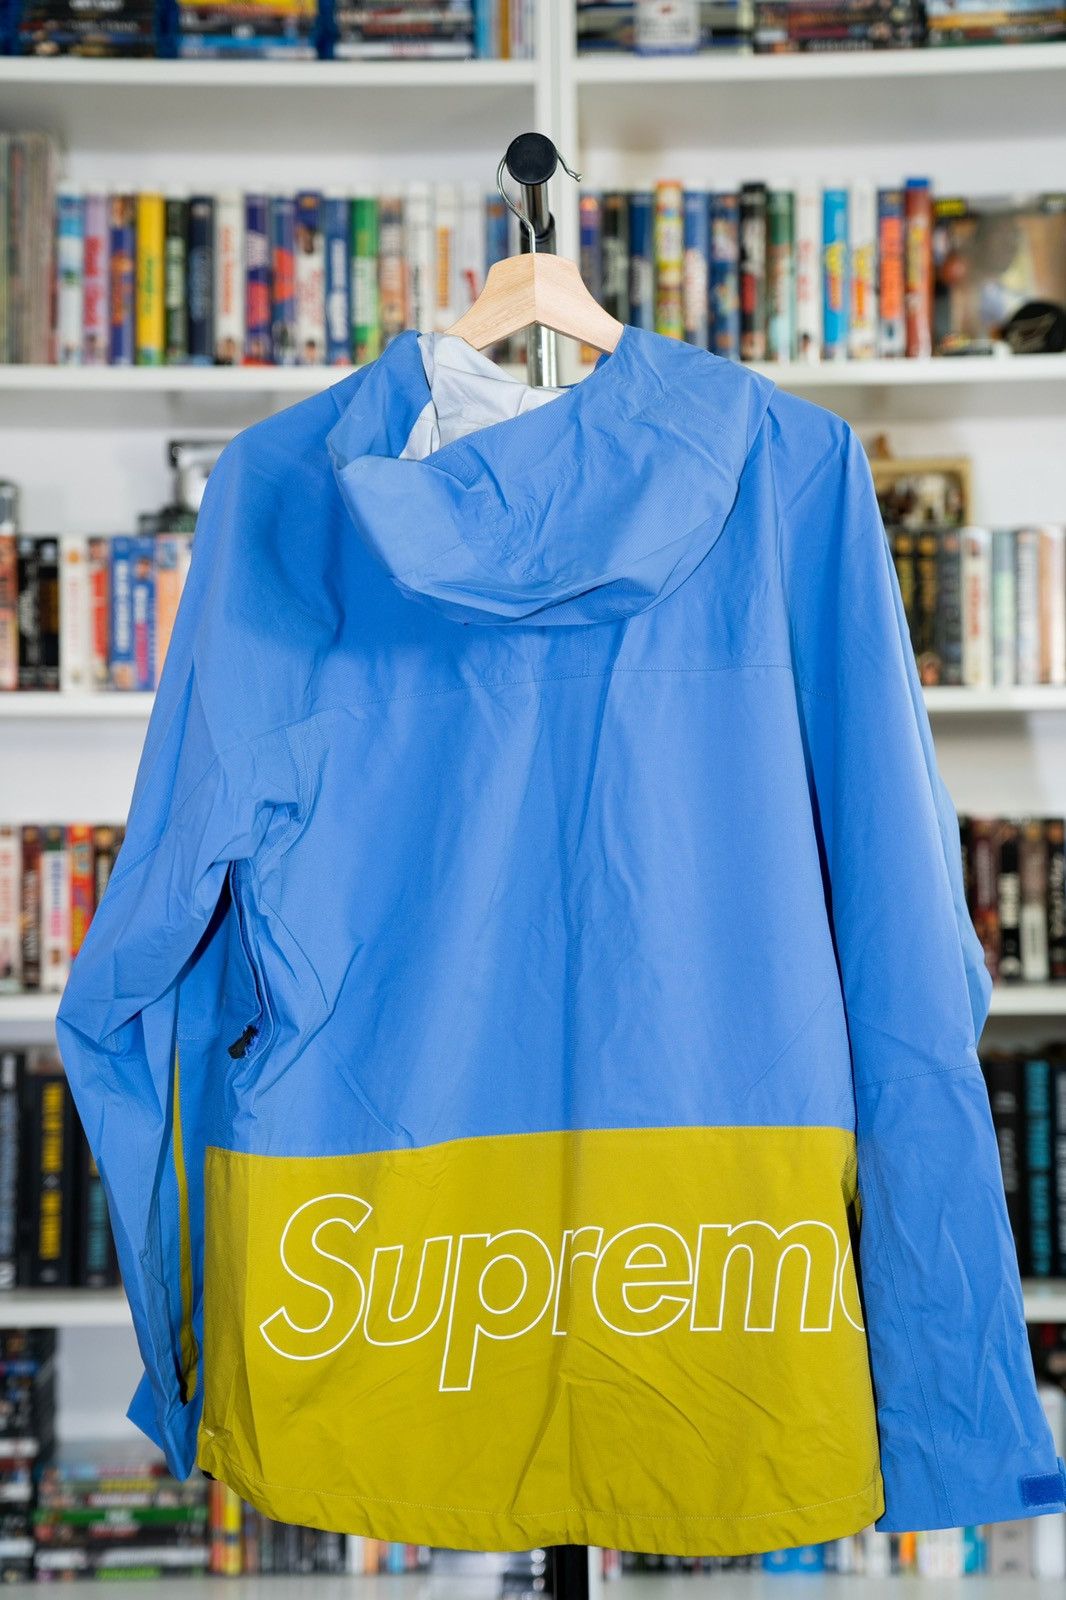 Supreme Supreme Taped Seam Jacket | Grailed